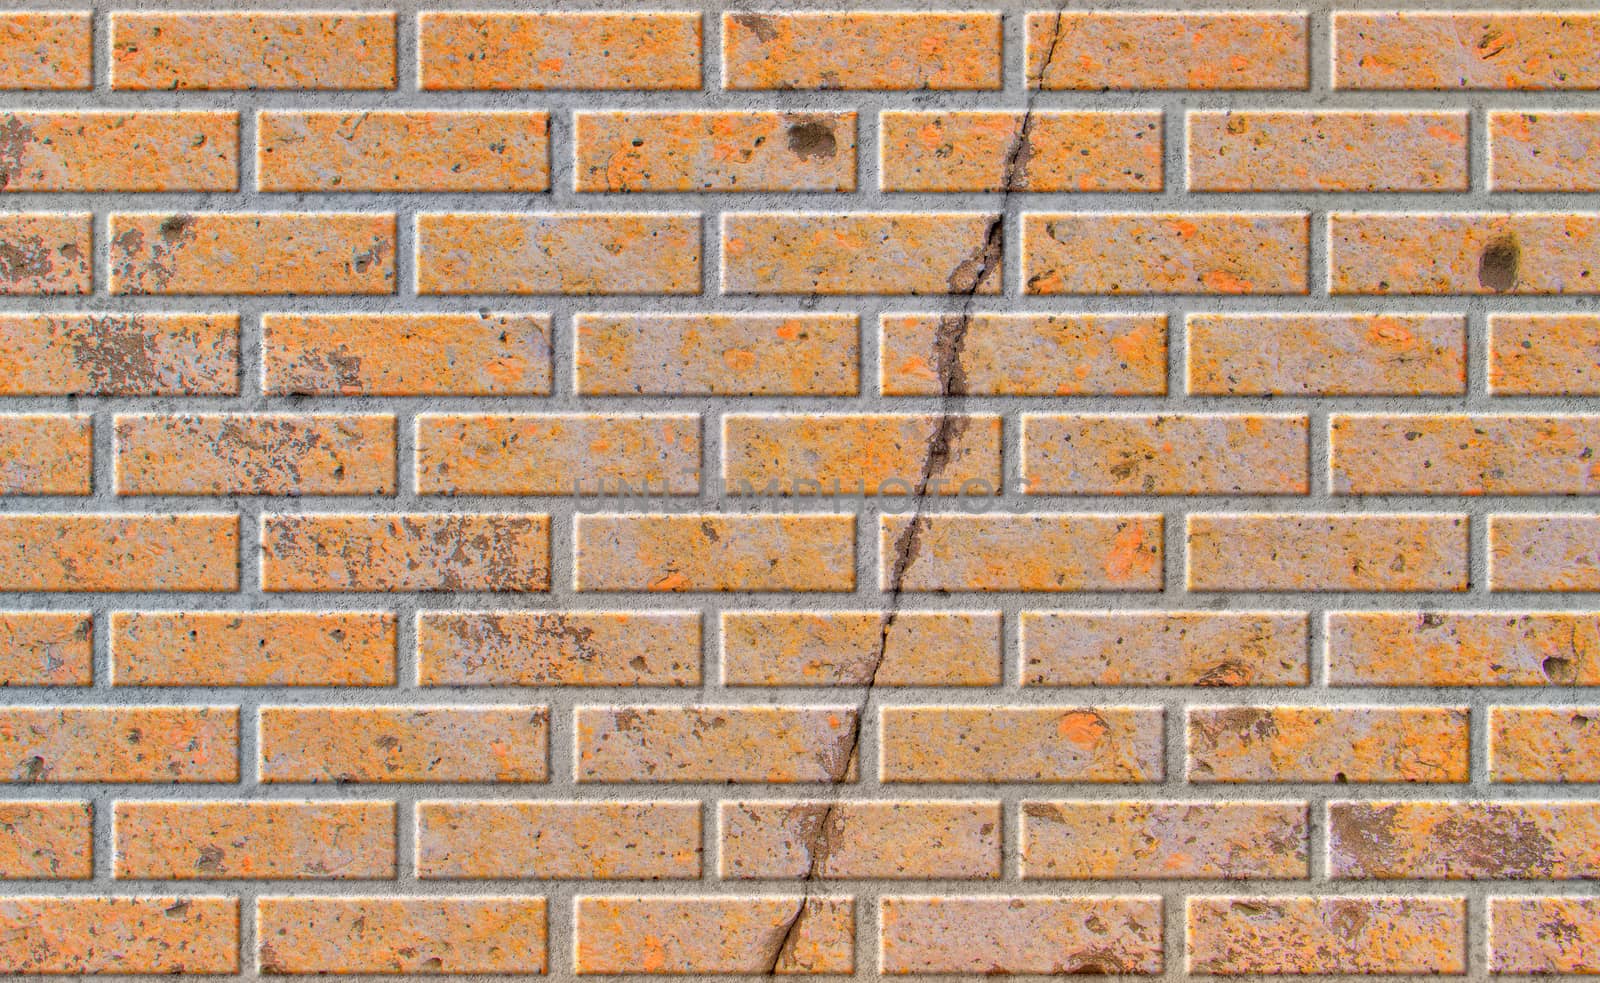 Brick wall. Pattern of decorative wall surface